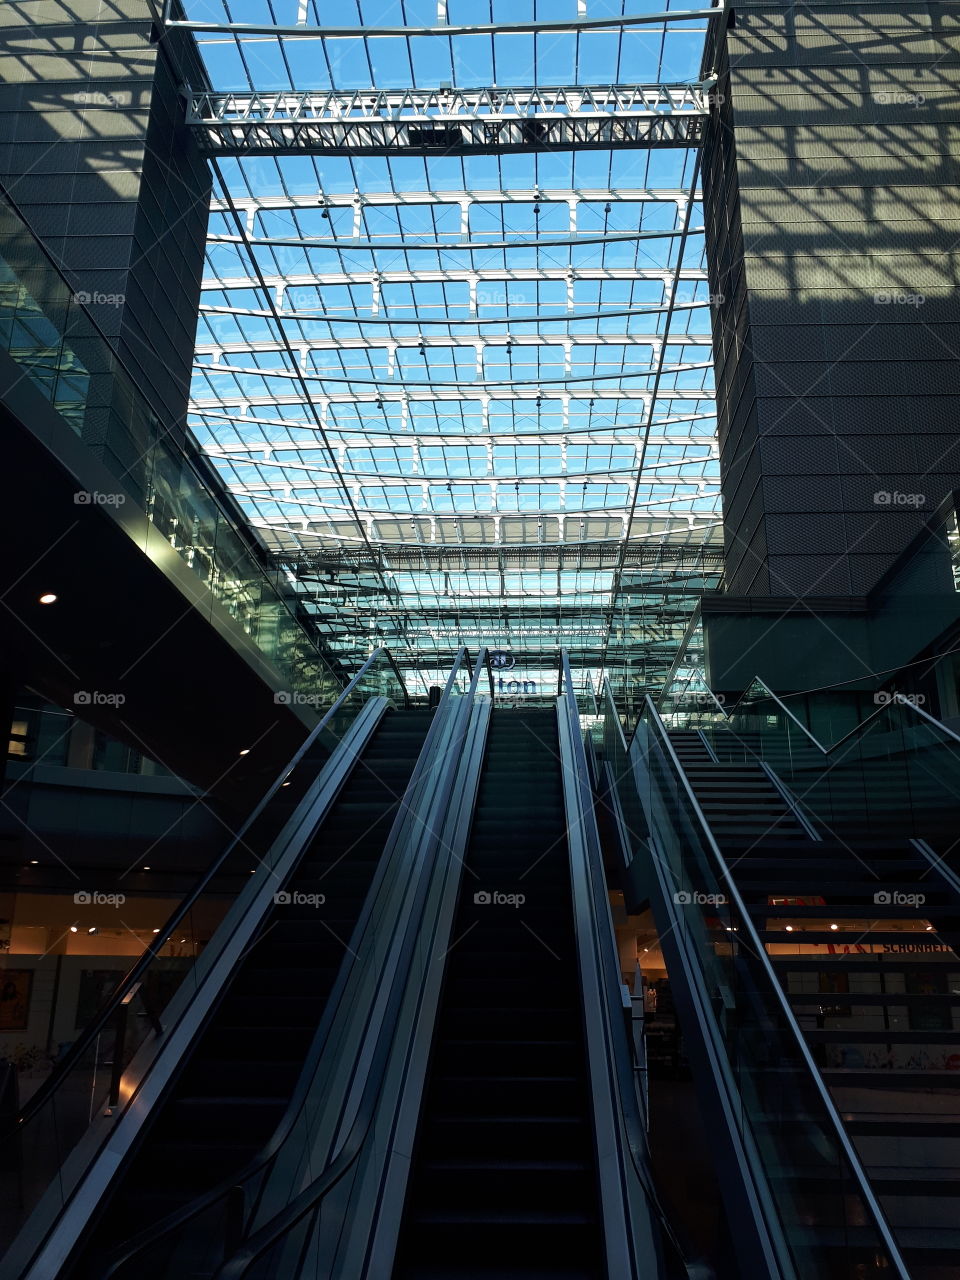 Escalators in the airport terminal in Frankfurt